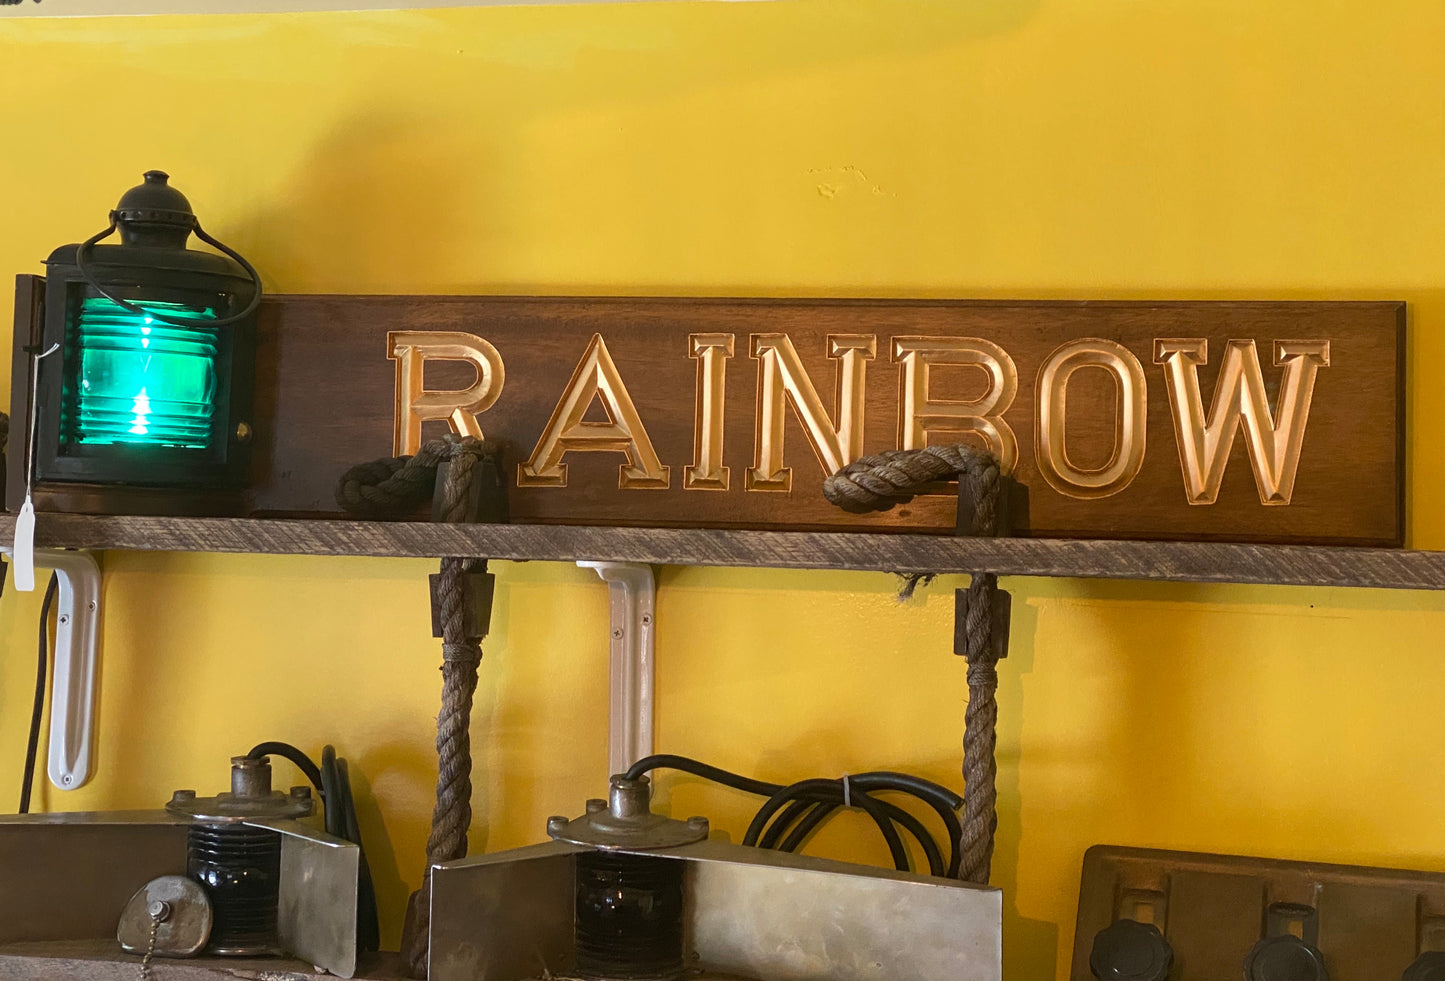 Quarter Board, "Rainbow", with Tung Woo Illumated Lamp